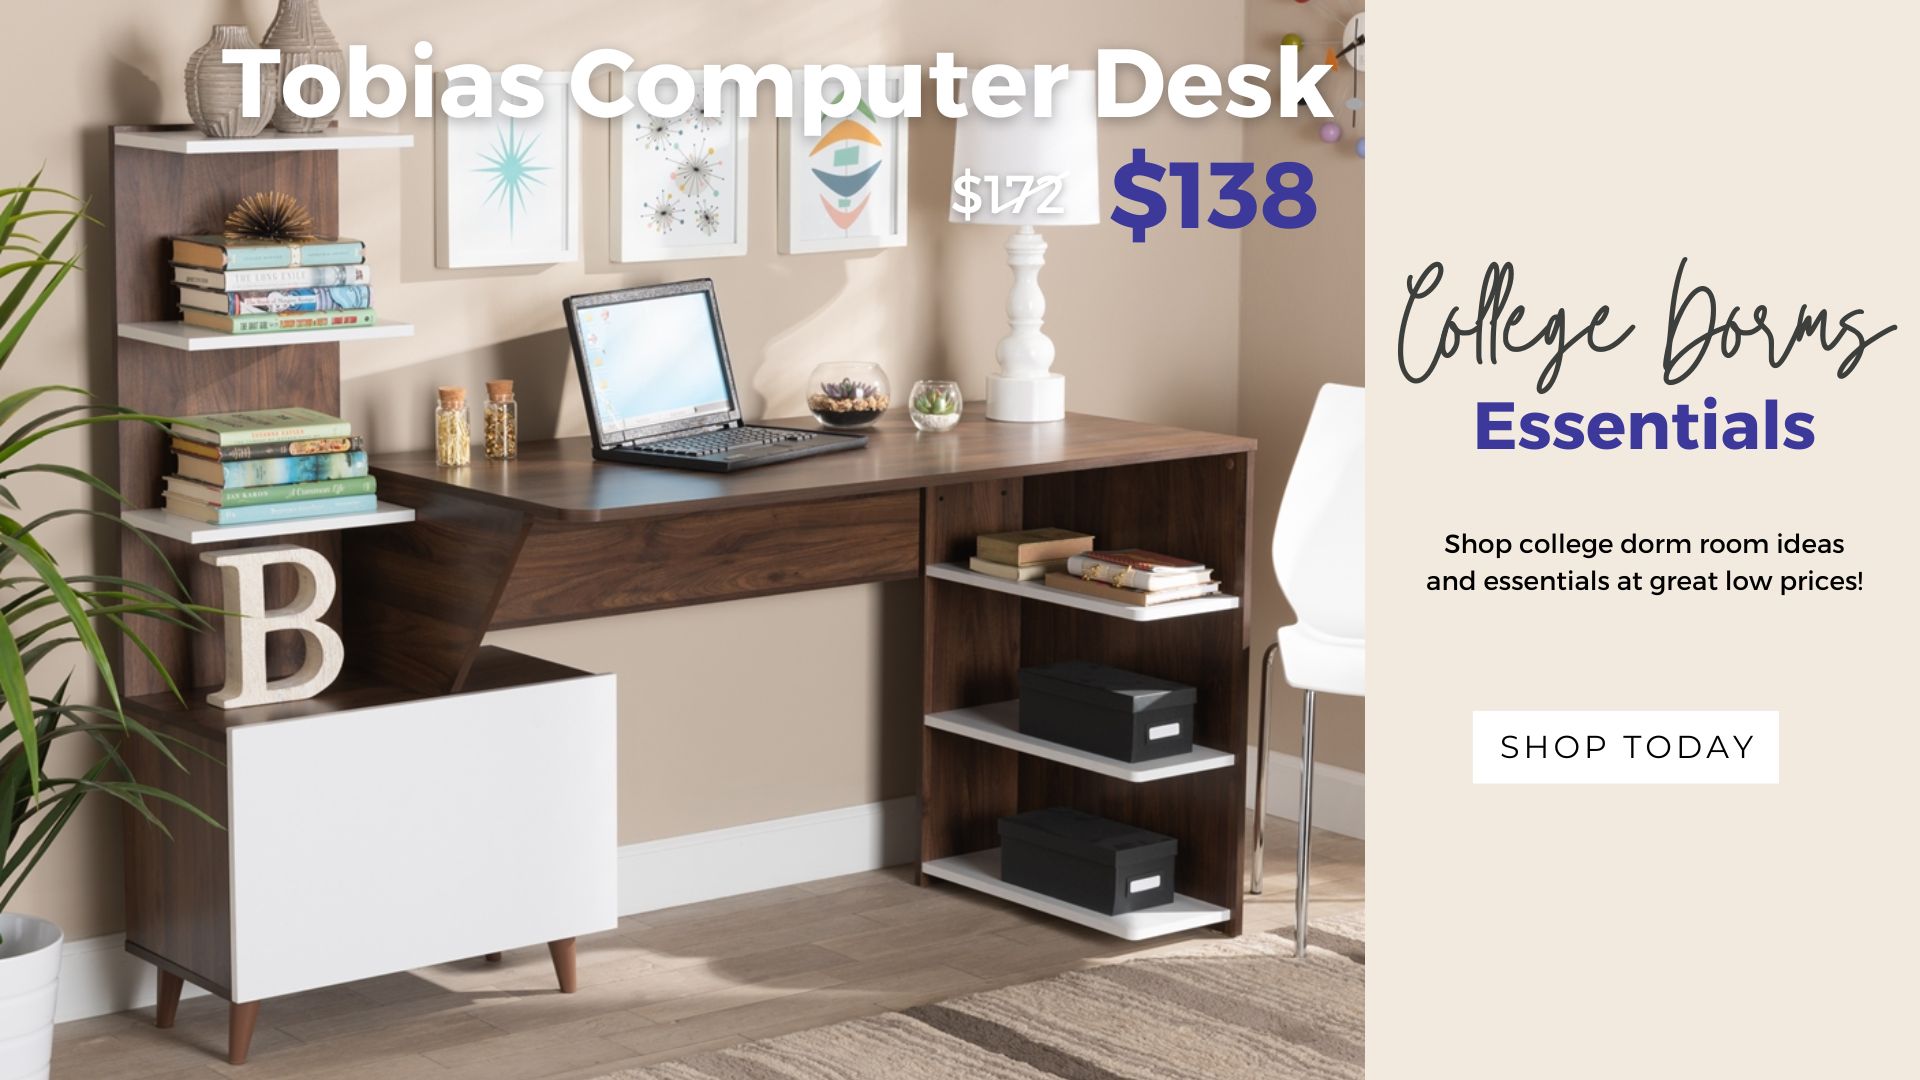 Tobias Computer Desk $138